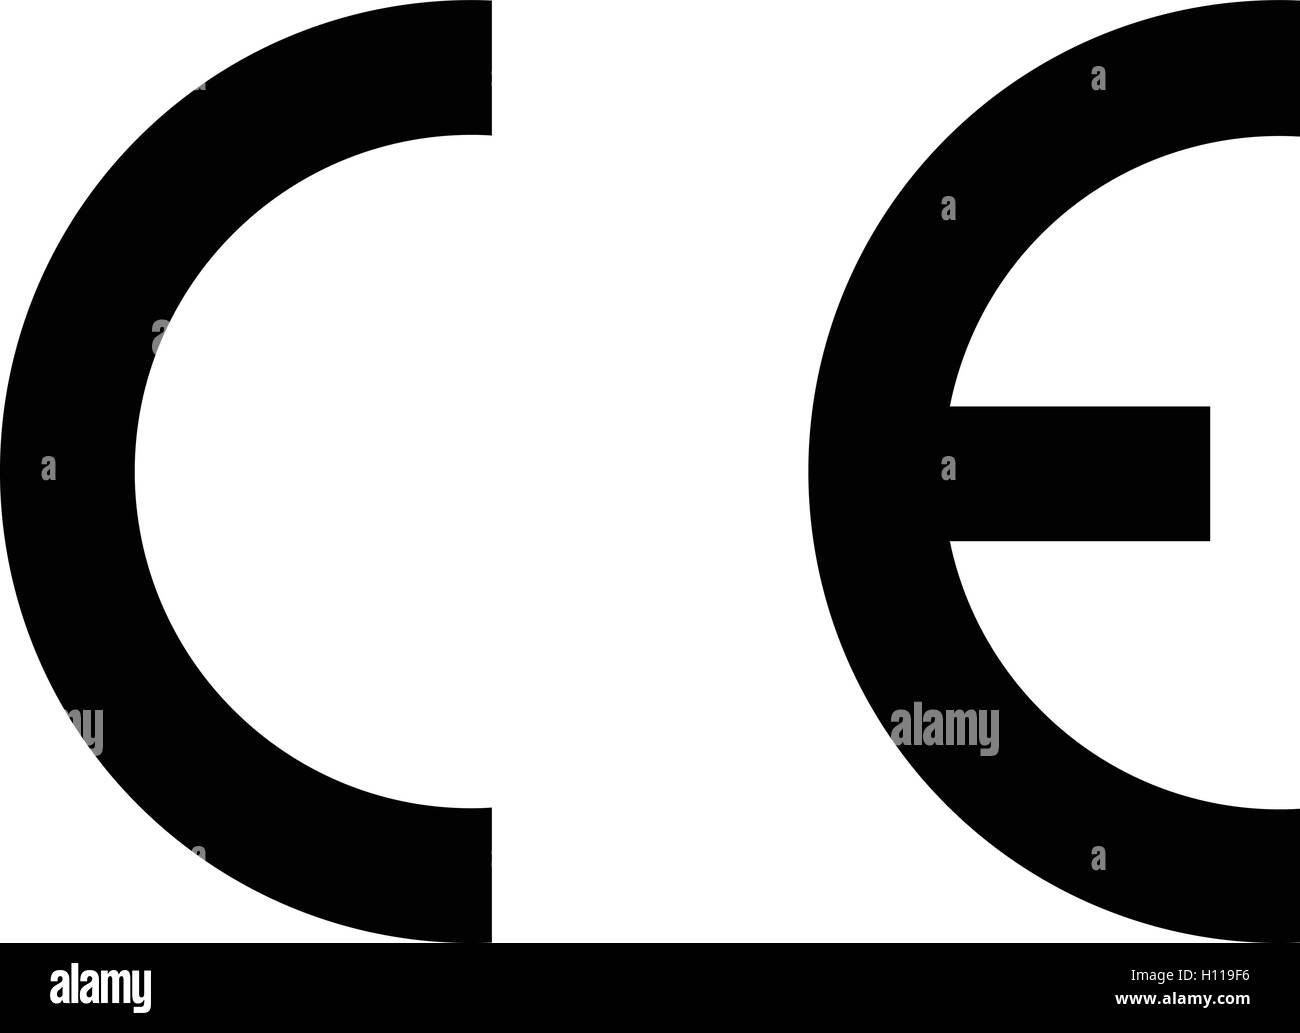 Black isolated CE illustration, CE mark symbol, CE mark icon, vector illustration. Stock Vector